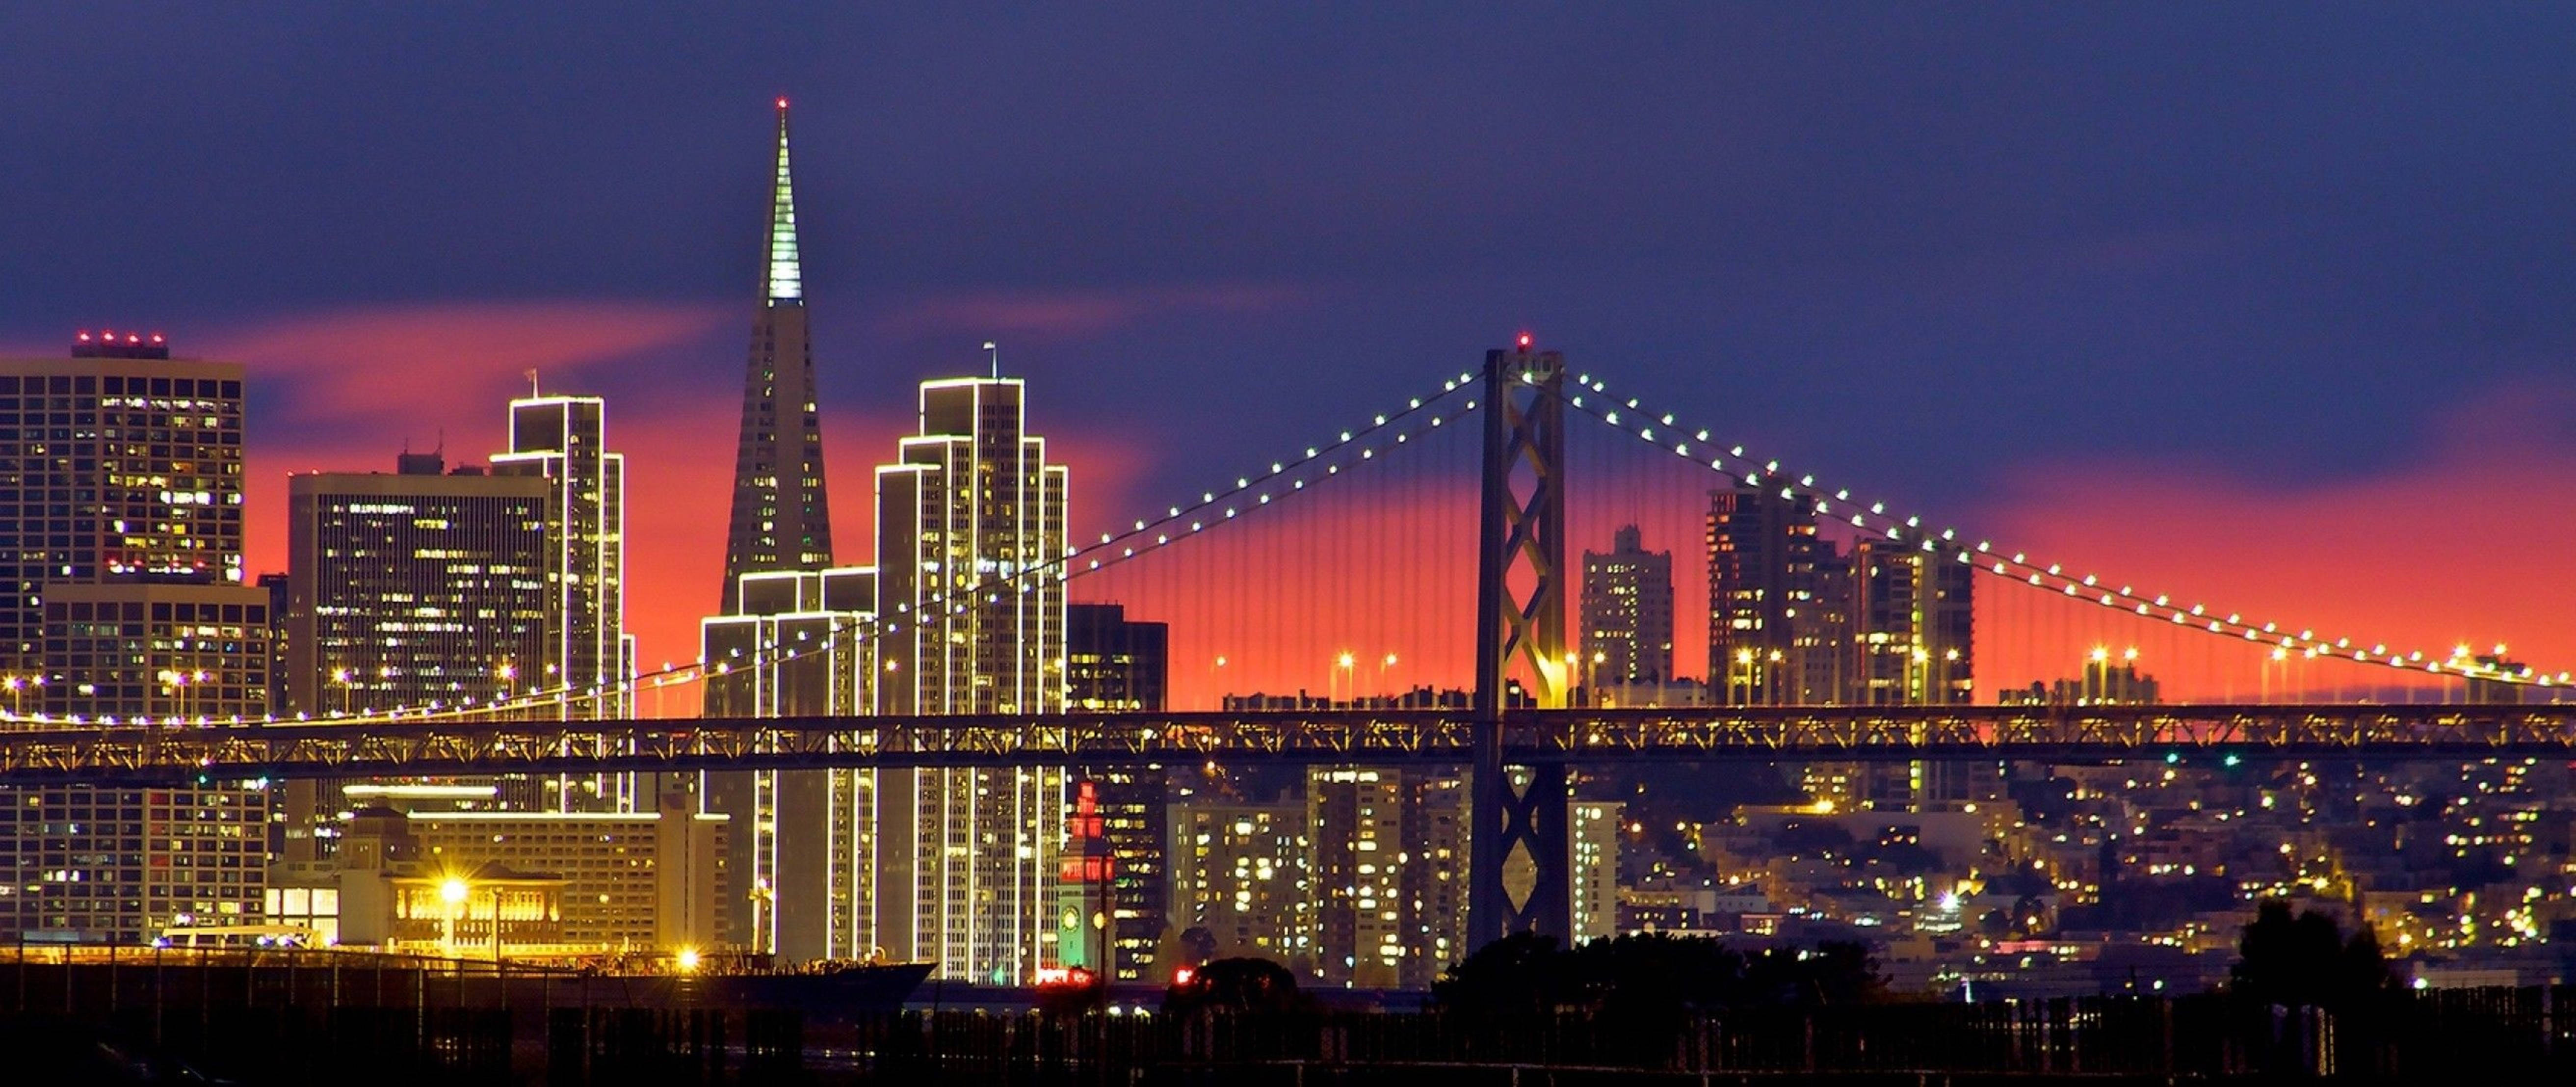 San Francisco 4k City Flashing Lights Picture